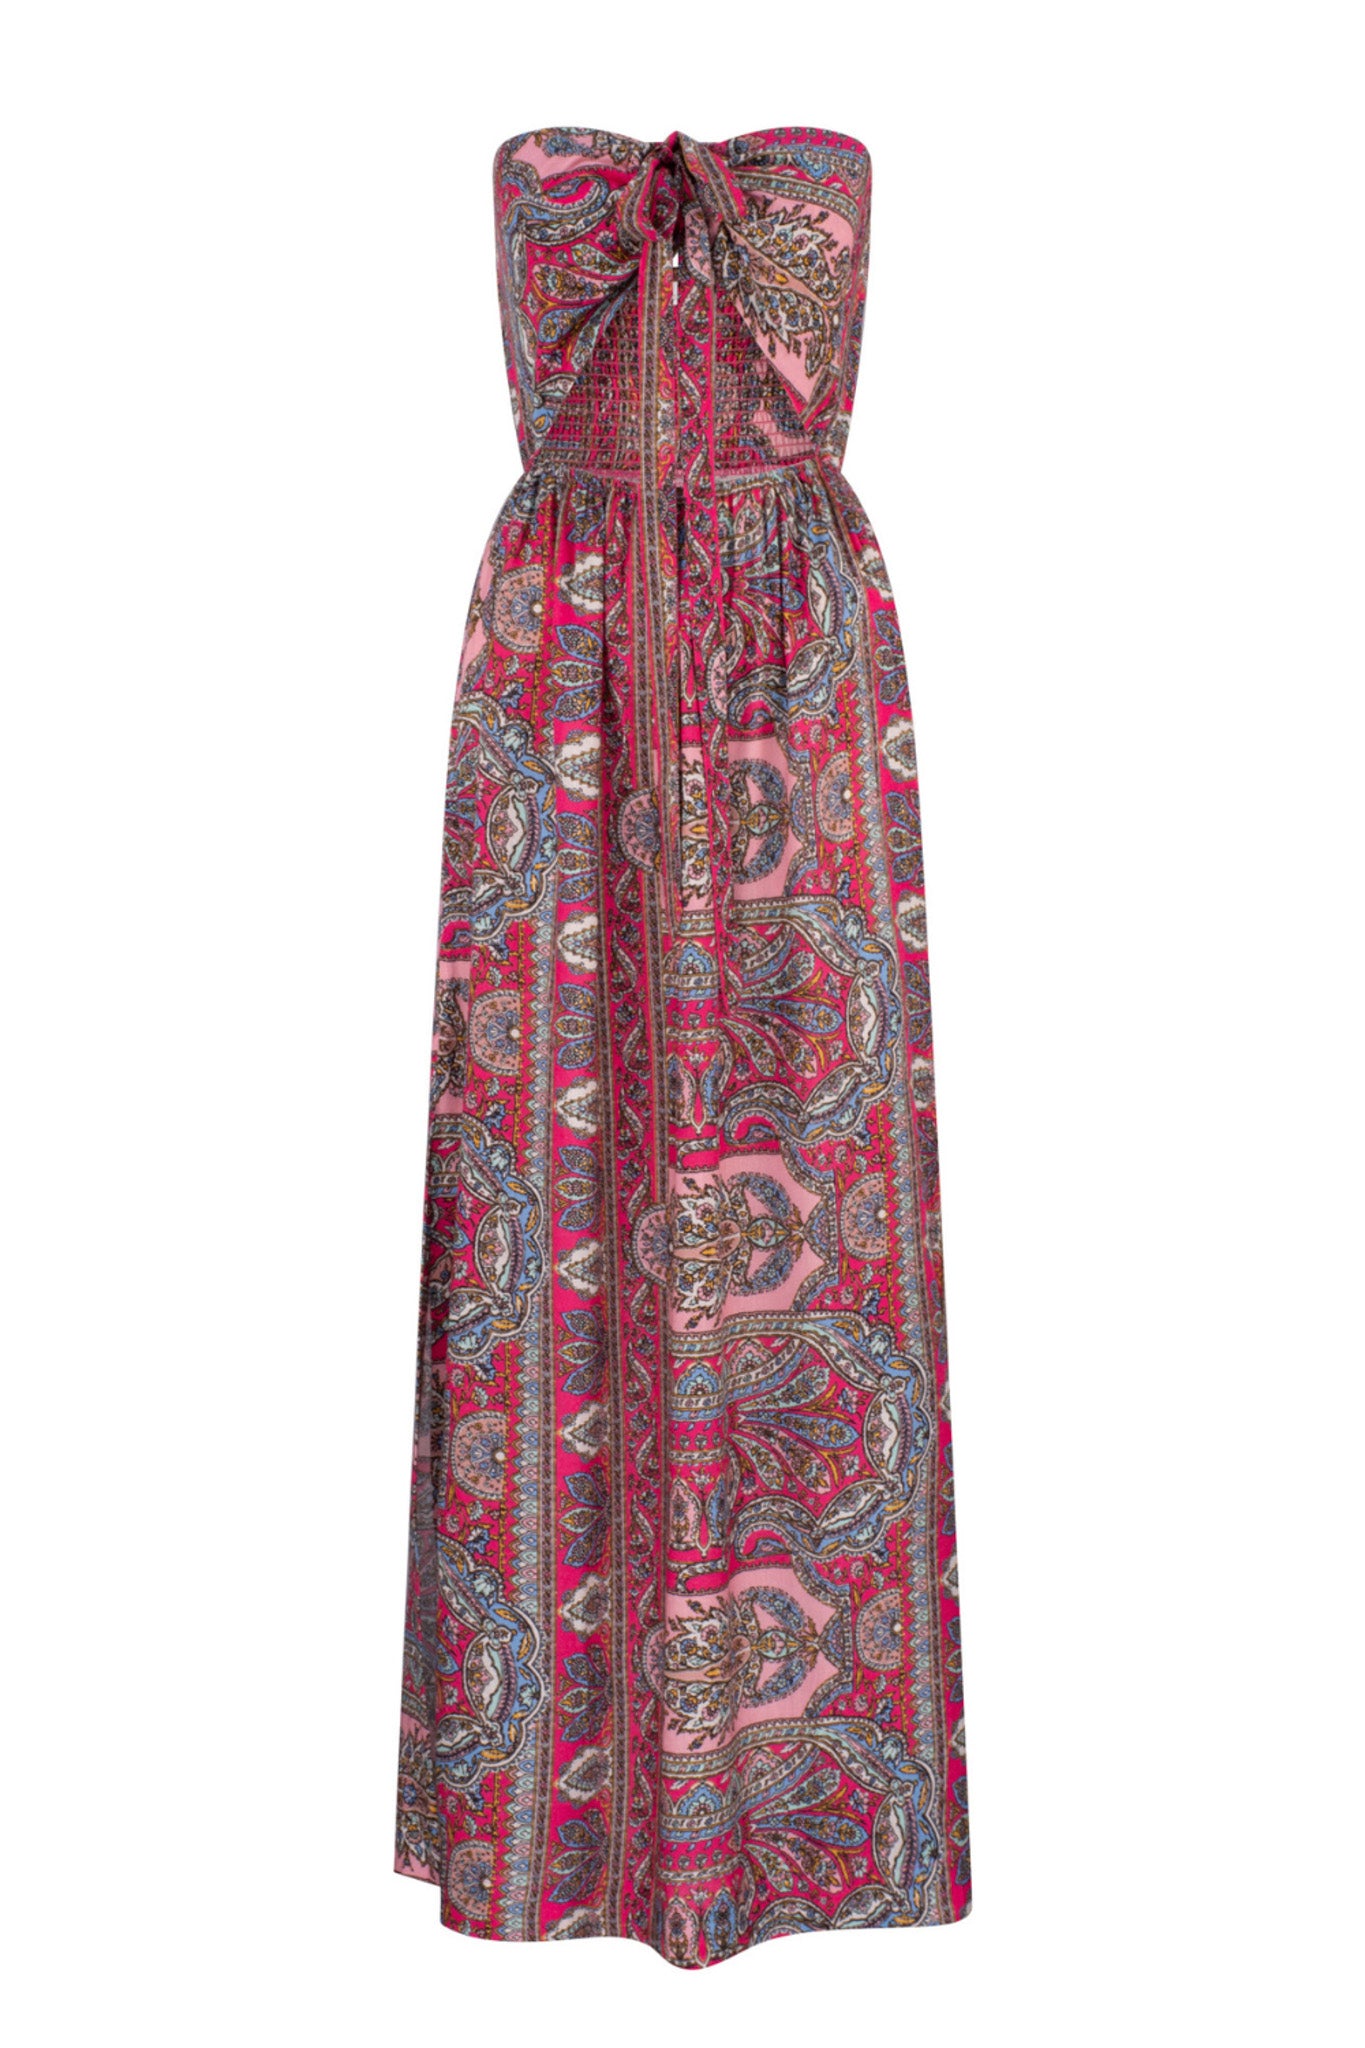 BNWT TIGERLILY LADIES Sold Out Hydra Maxi Dress (Cornflower) Size 6 Rrp  $270 $135.99 - PicClick AU